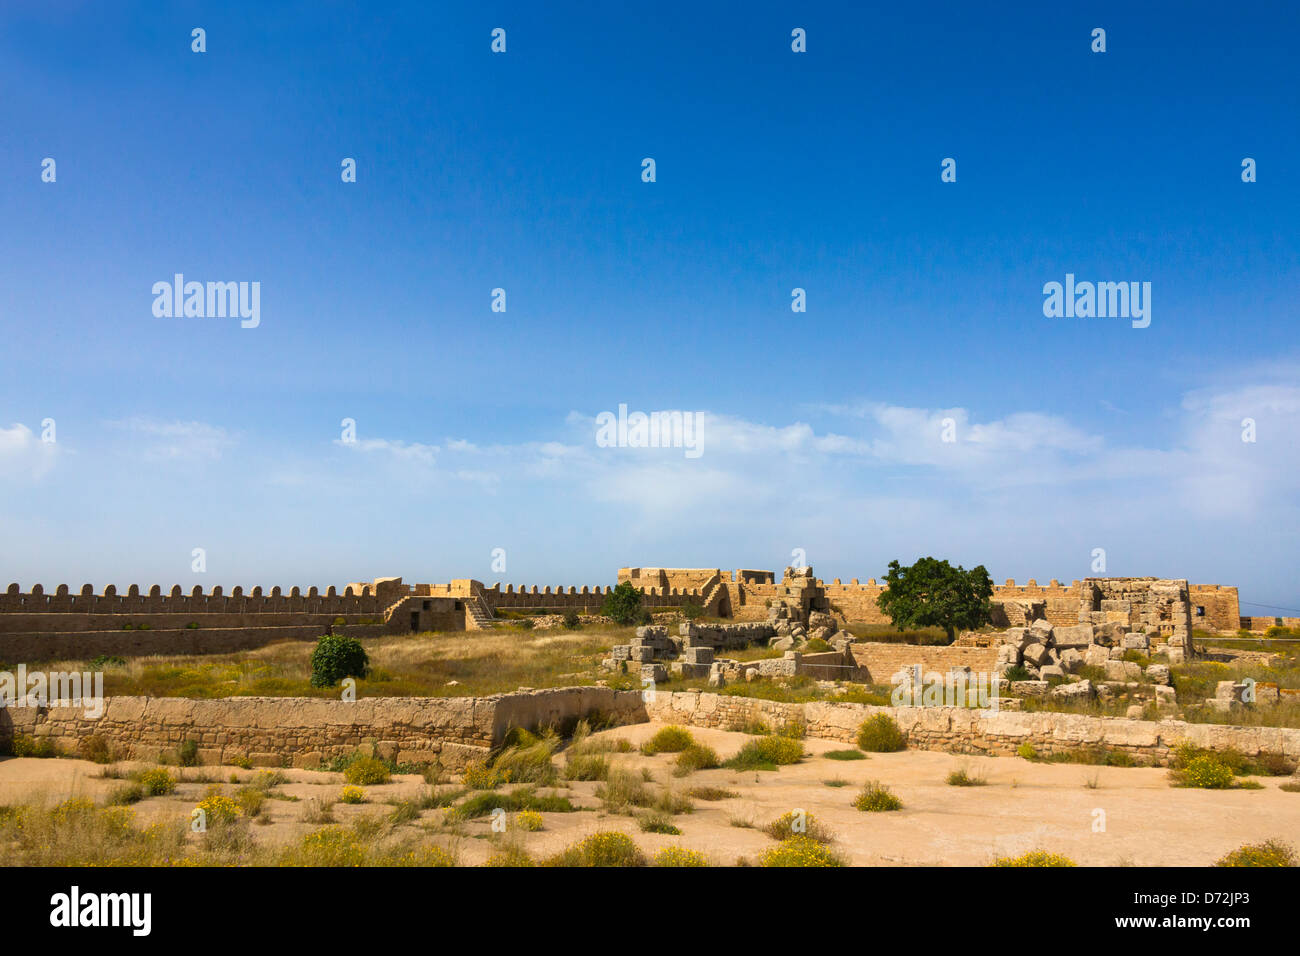 Kelibia Fortress, Cap Bon, Tunisia Stock Photo